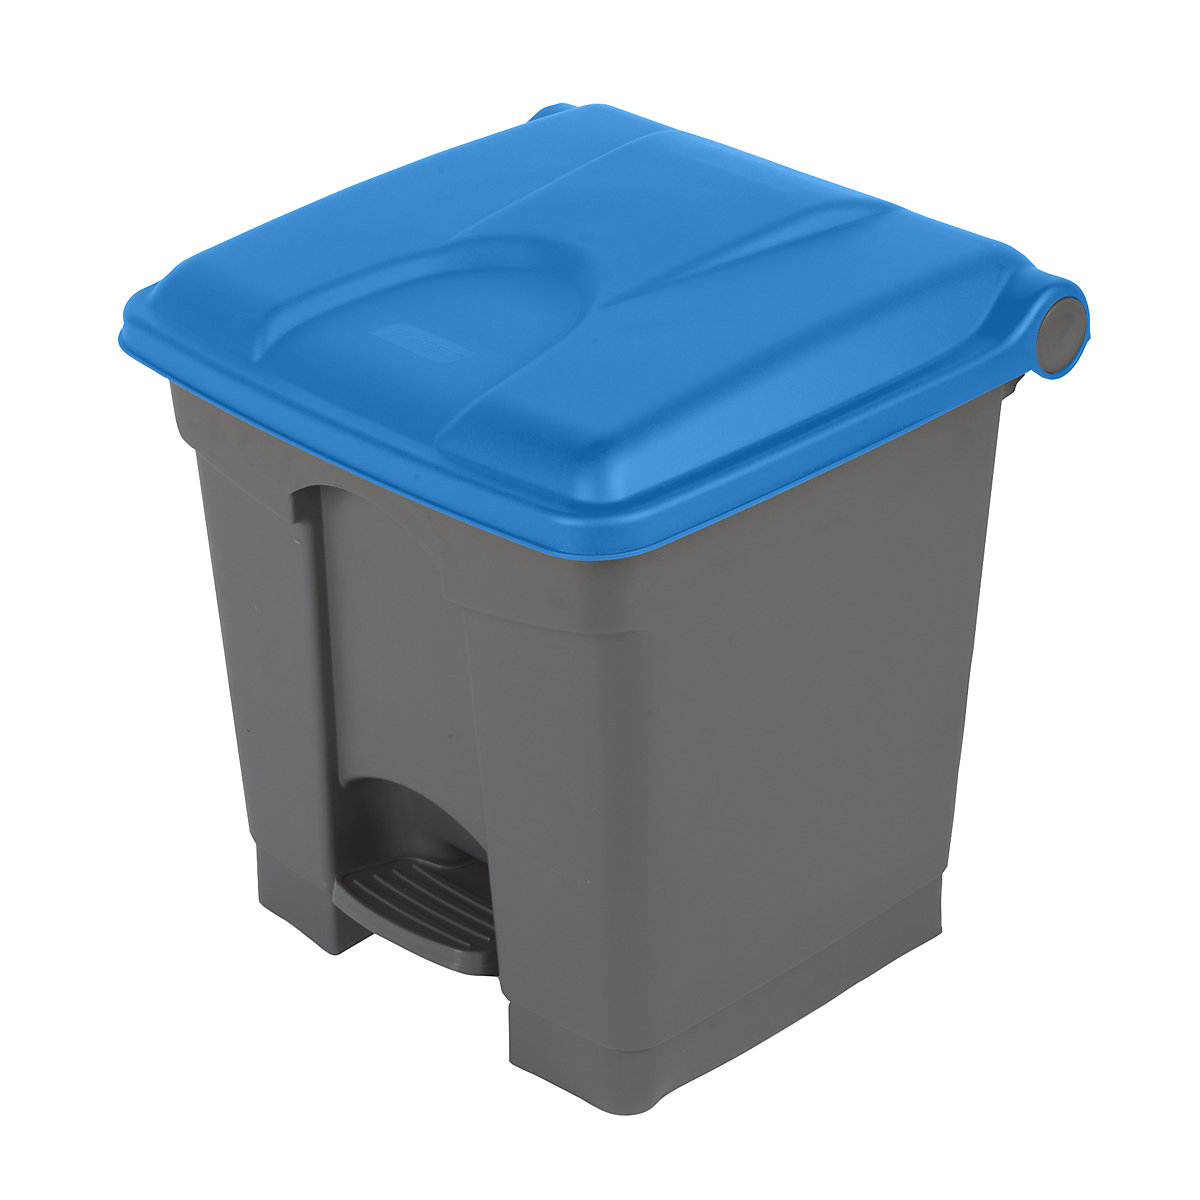 EUROKRAFTbasic – Pedal waste collector, capacity 30 l, WxHxD 410 x 435 x 400 mm, grey, blue lid